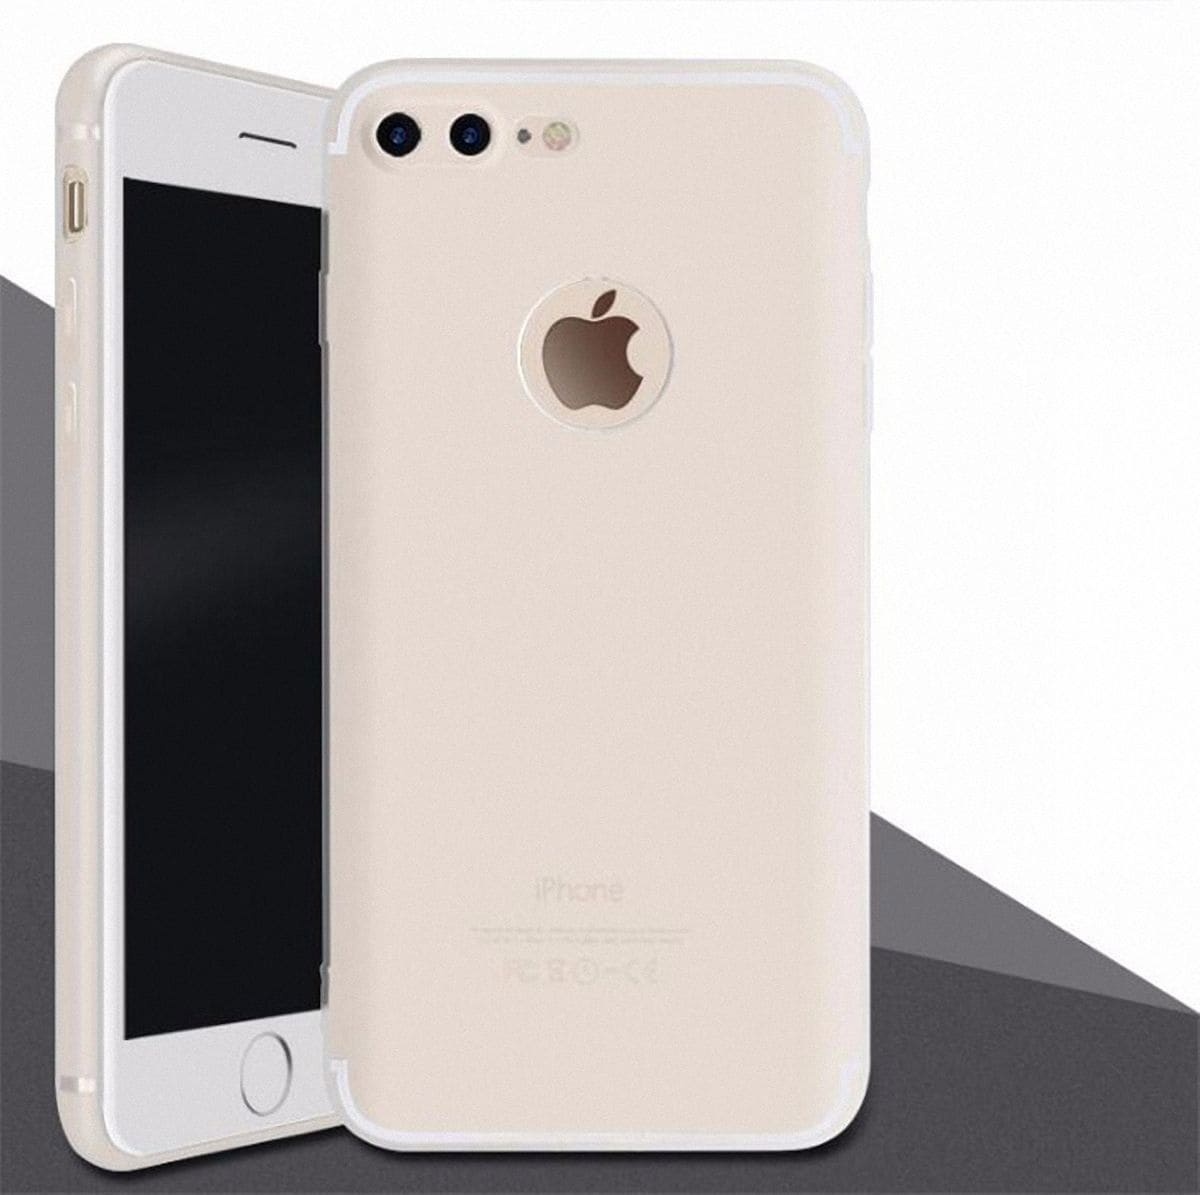 König Design TPU Silikon Case für Handy Apple iPhone 6 Plus / 6s Plus Cover Transparent Neu (IPhone 6S Plus, iPhone 6+), Smartphone Hülle, Transparent